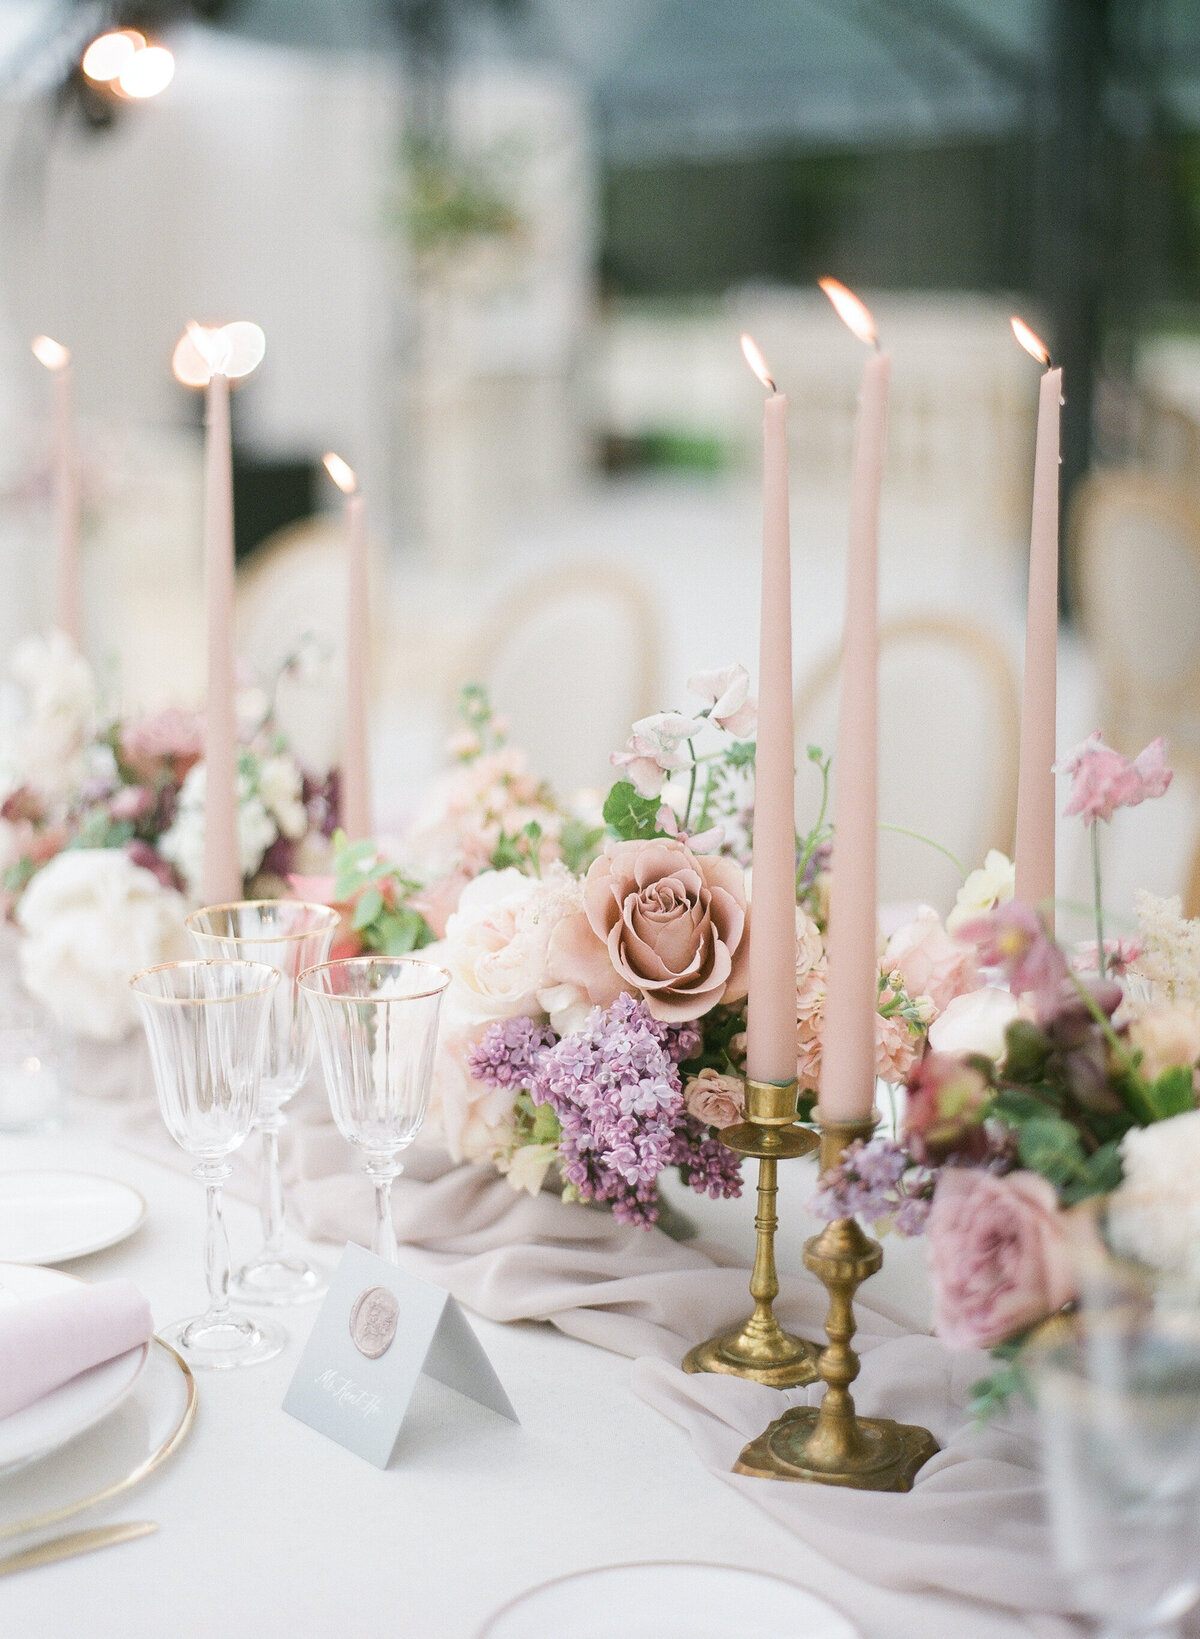 Chateau_de_Chantilly_wedding_florist10